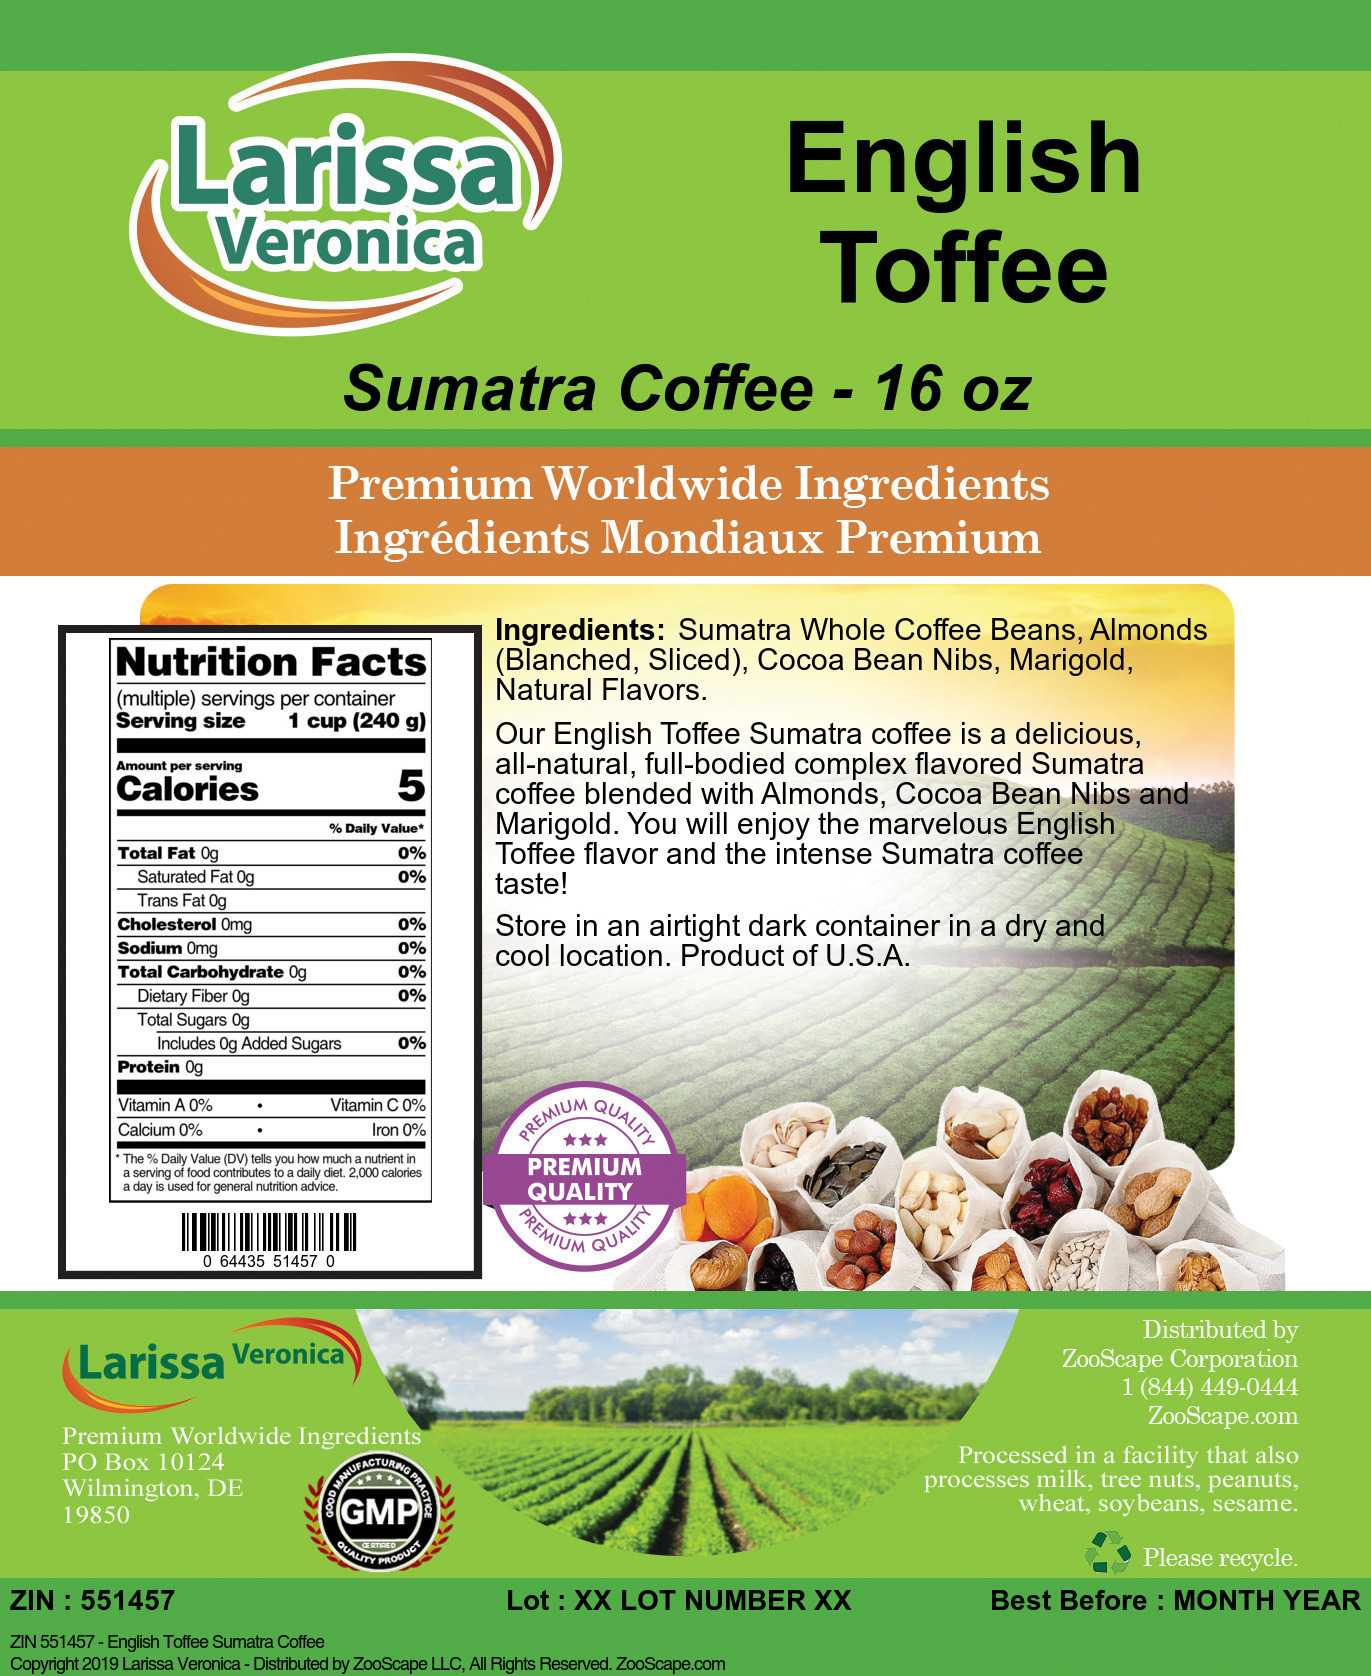 English Toffee Sumatra Coffee - Label